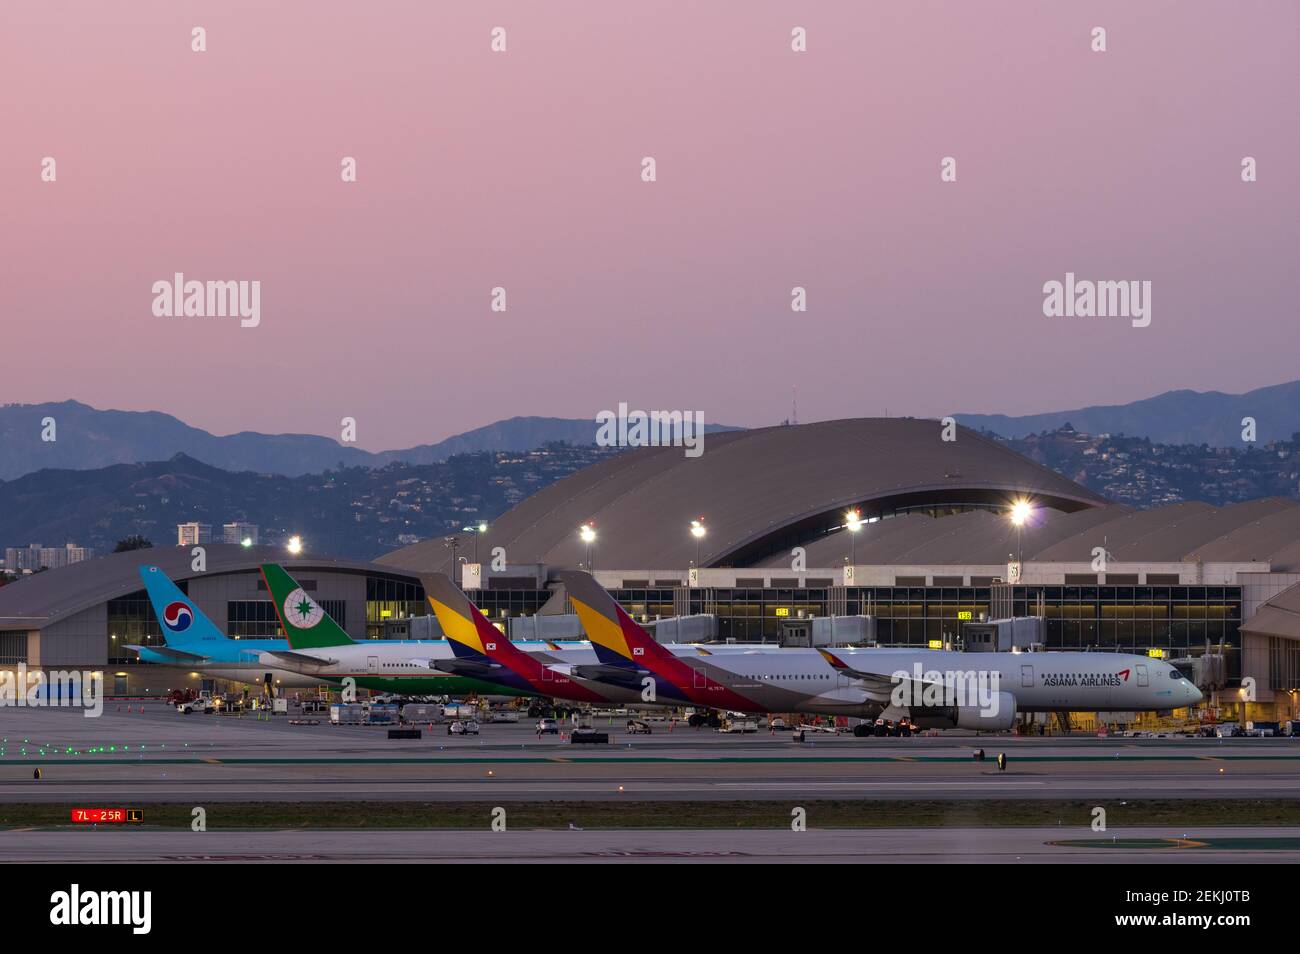 Los Angeles, CA, USA - 22. Februar 2021: Klares Bild des Tom Bradley International Terminals im Los Angeles International Airport in der Abenddämmerung. Stockfoto